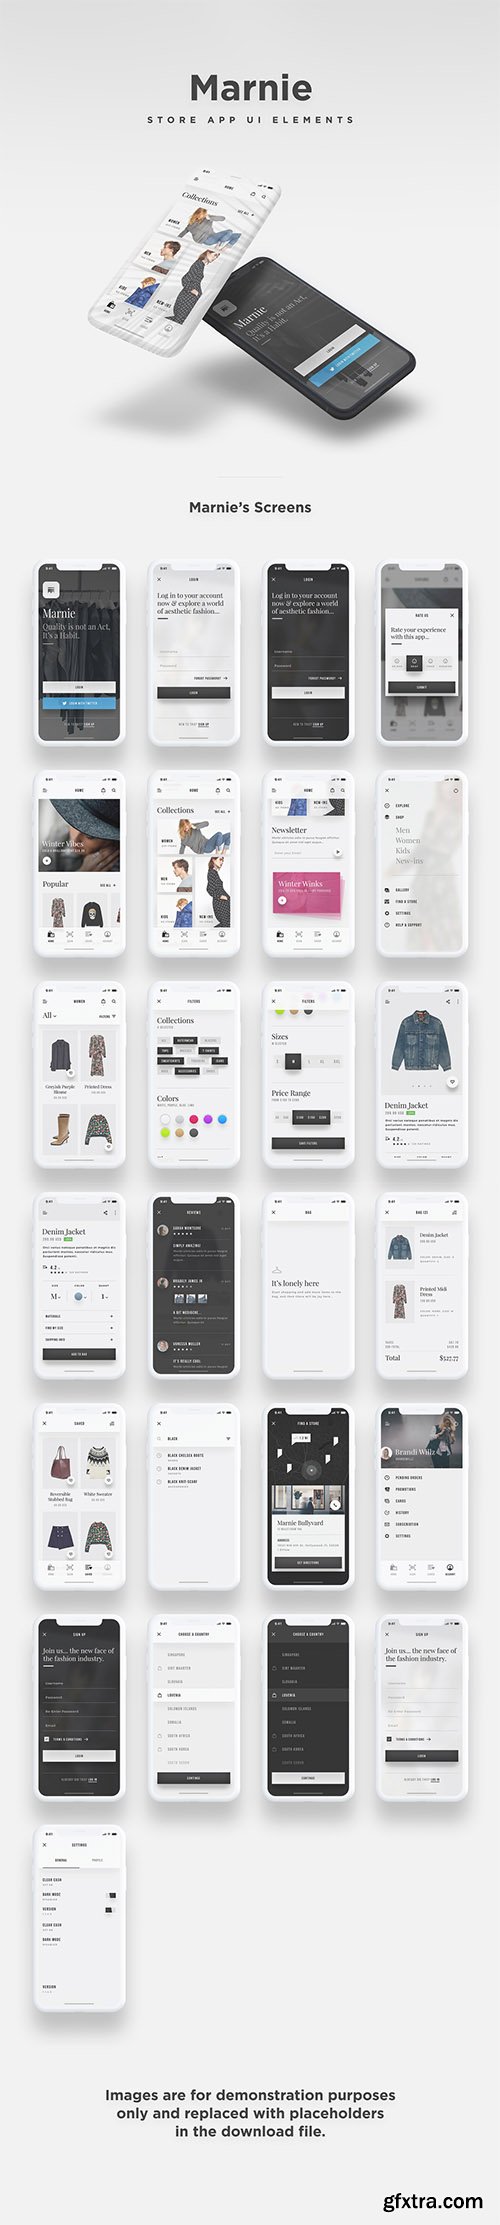 Marnie iOS UI Kit